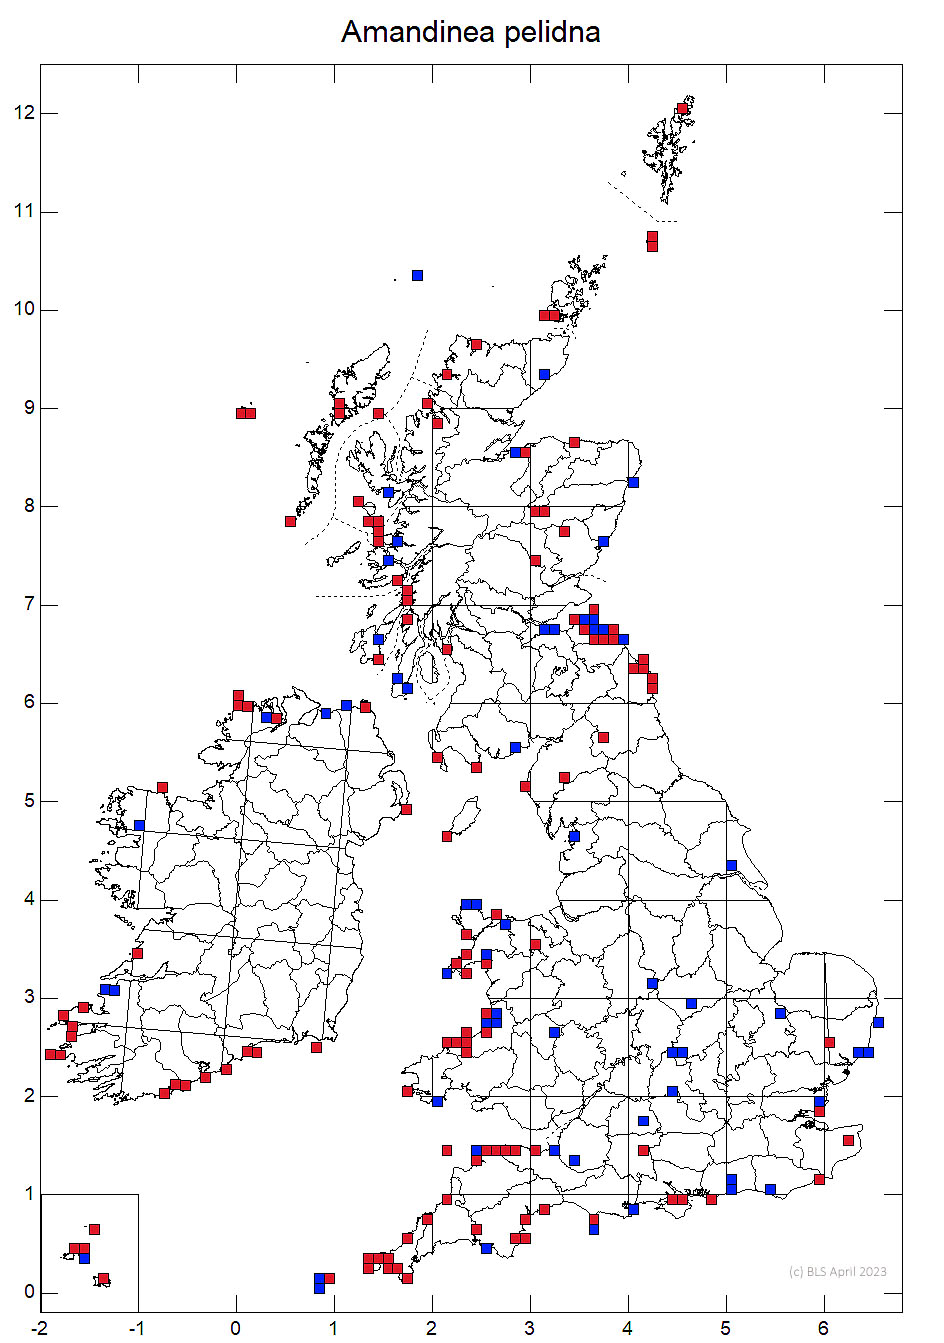 Amandinea pelidna 10km sq distribution map